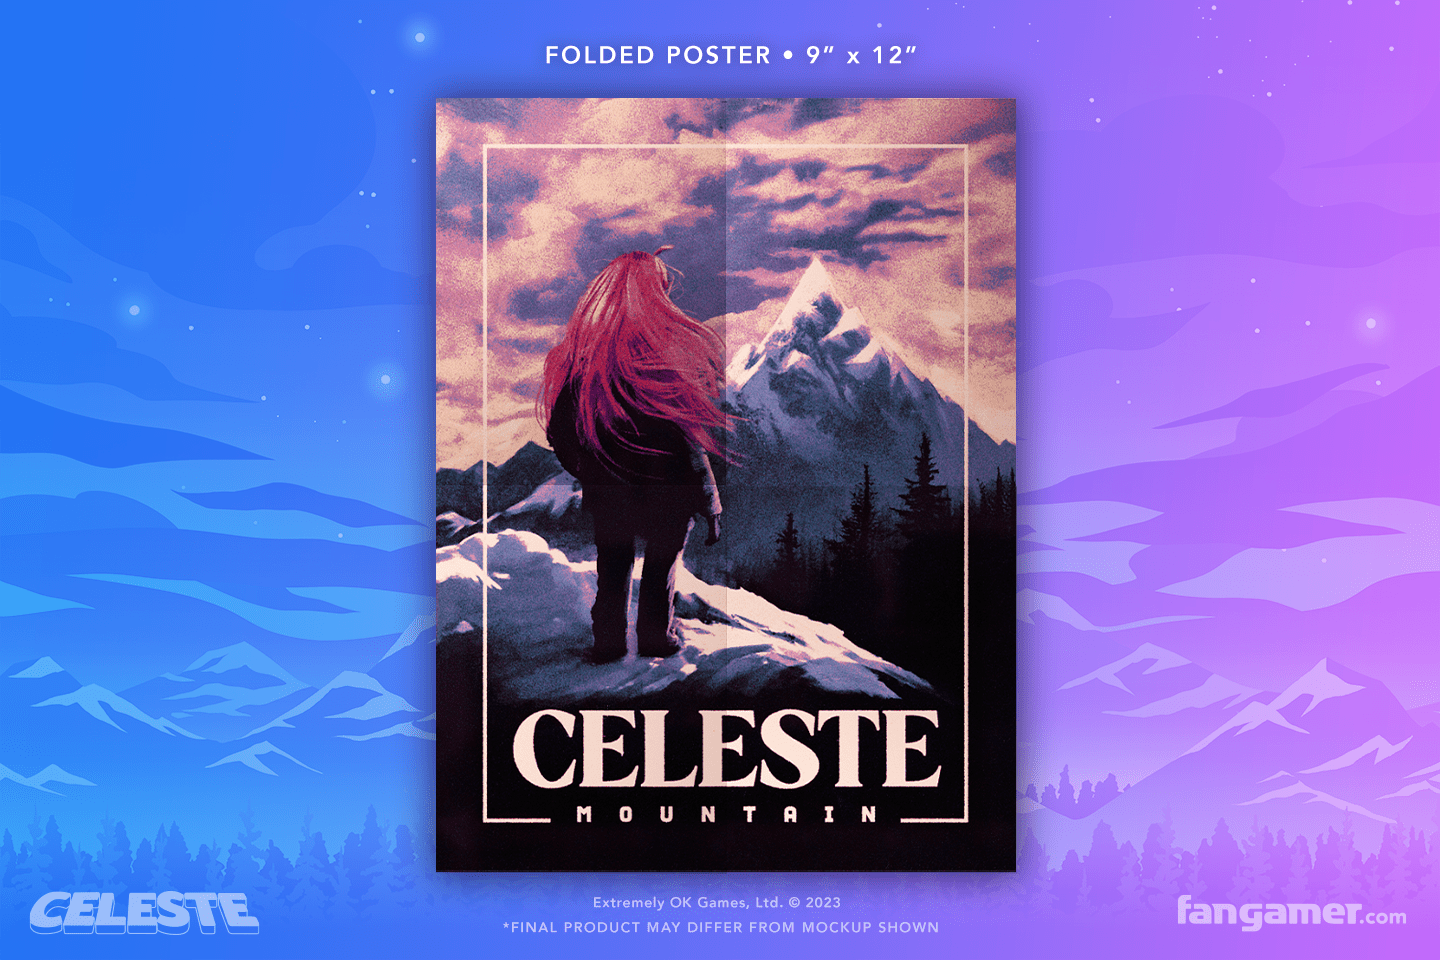 Celeste - Nintendo Switch (Limited Foil Cover Art Release)